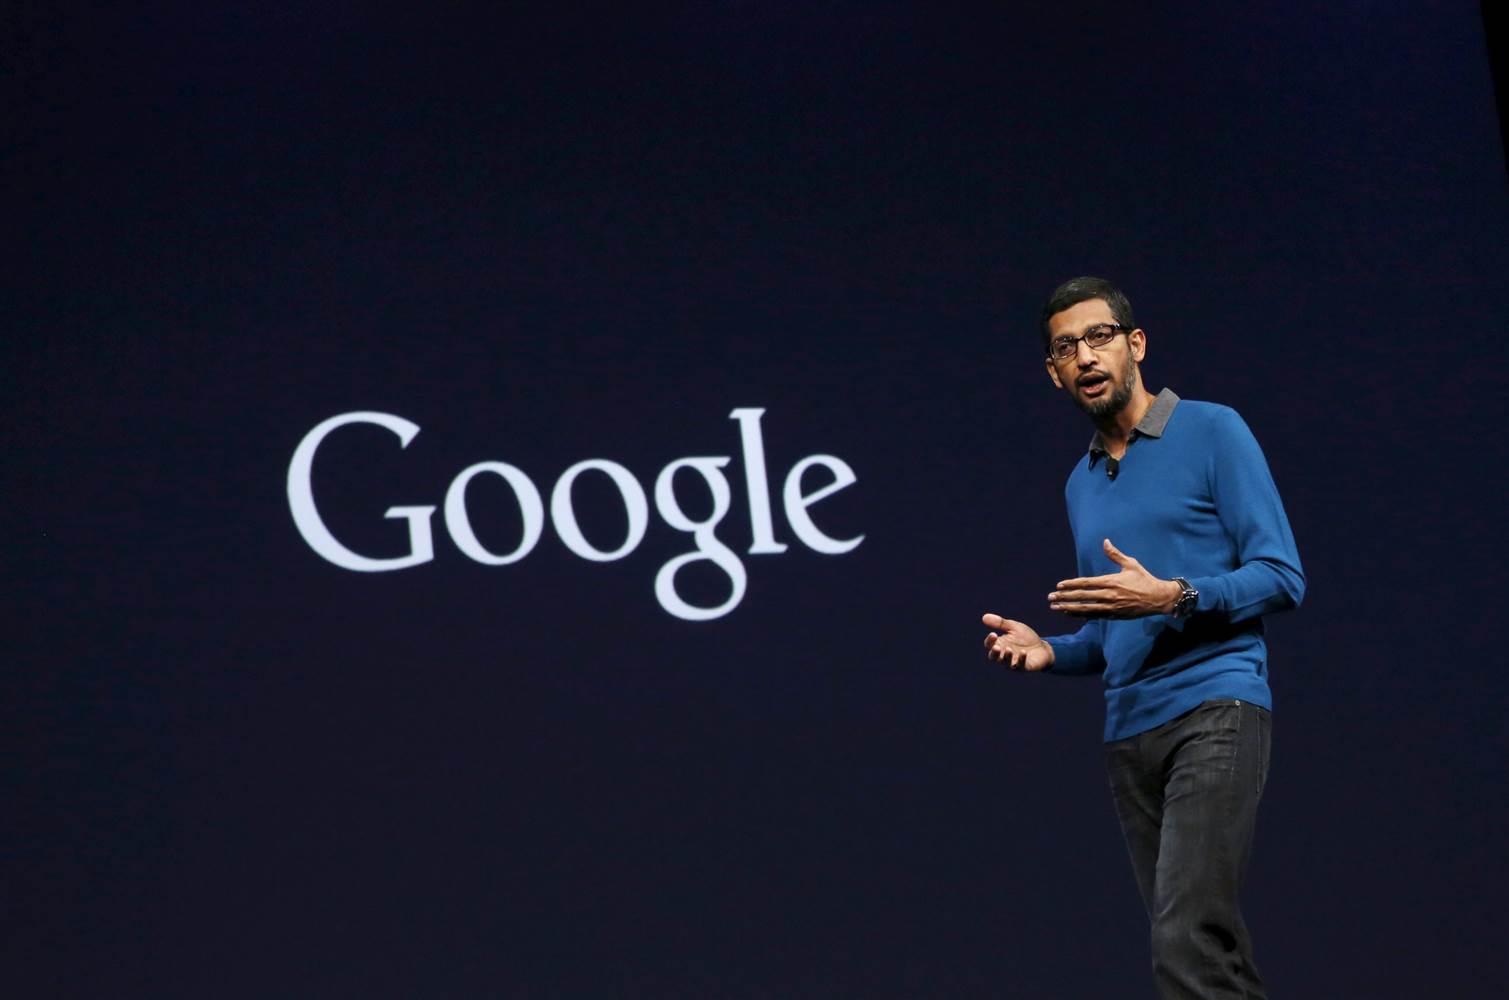 Google CEO to meet with Vietnamese entrepreneurs, startups this week: media